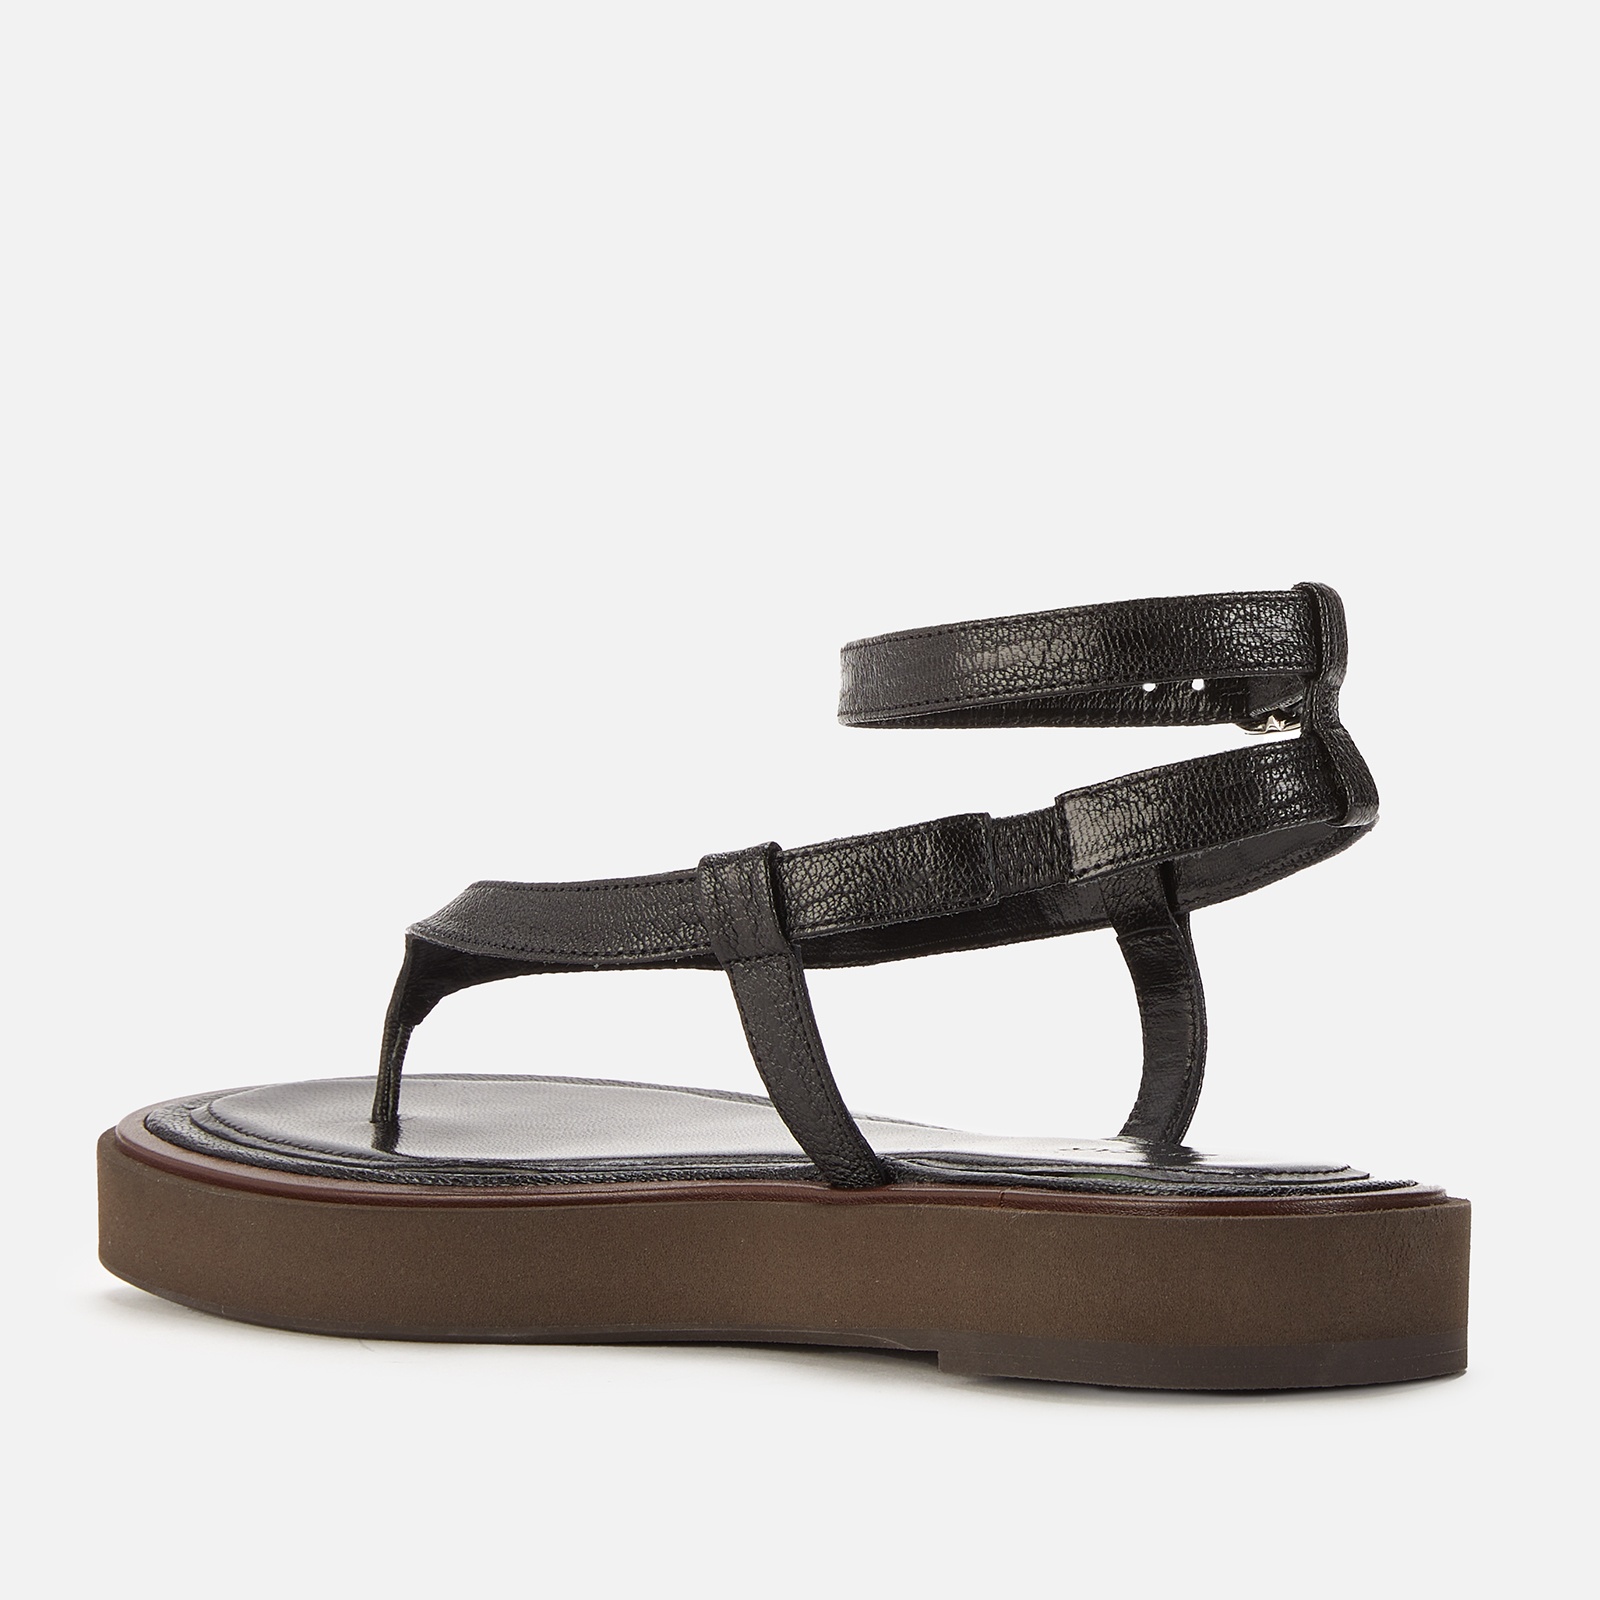 BY FAR Women's Cece Leather Toe Post Sandals - Black - 2